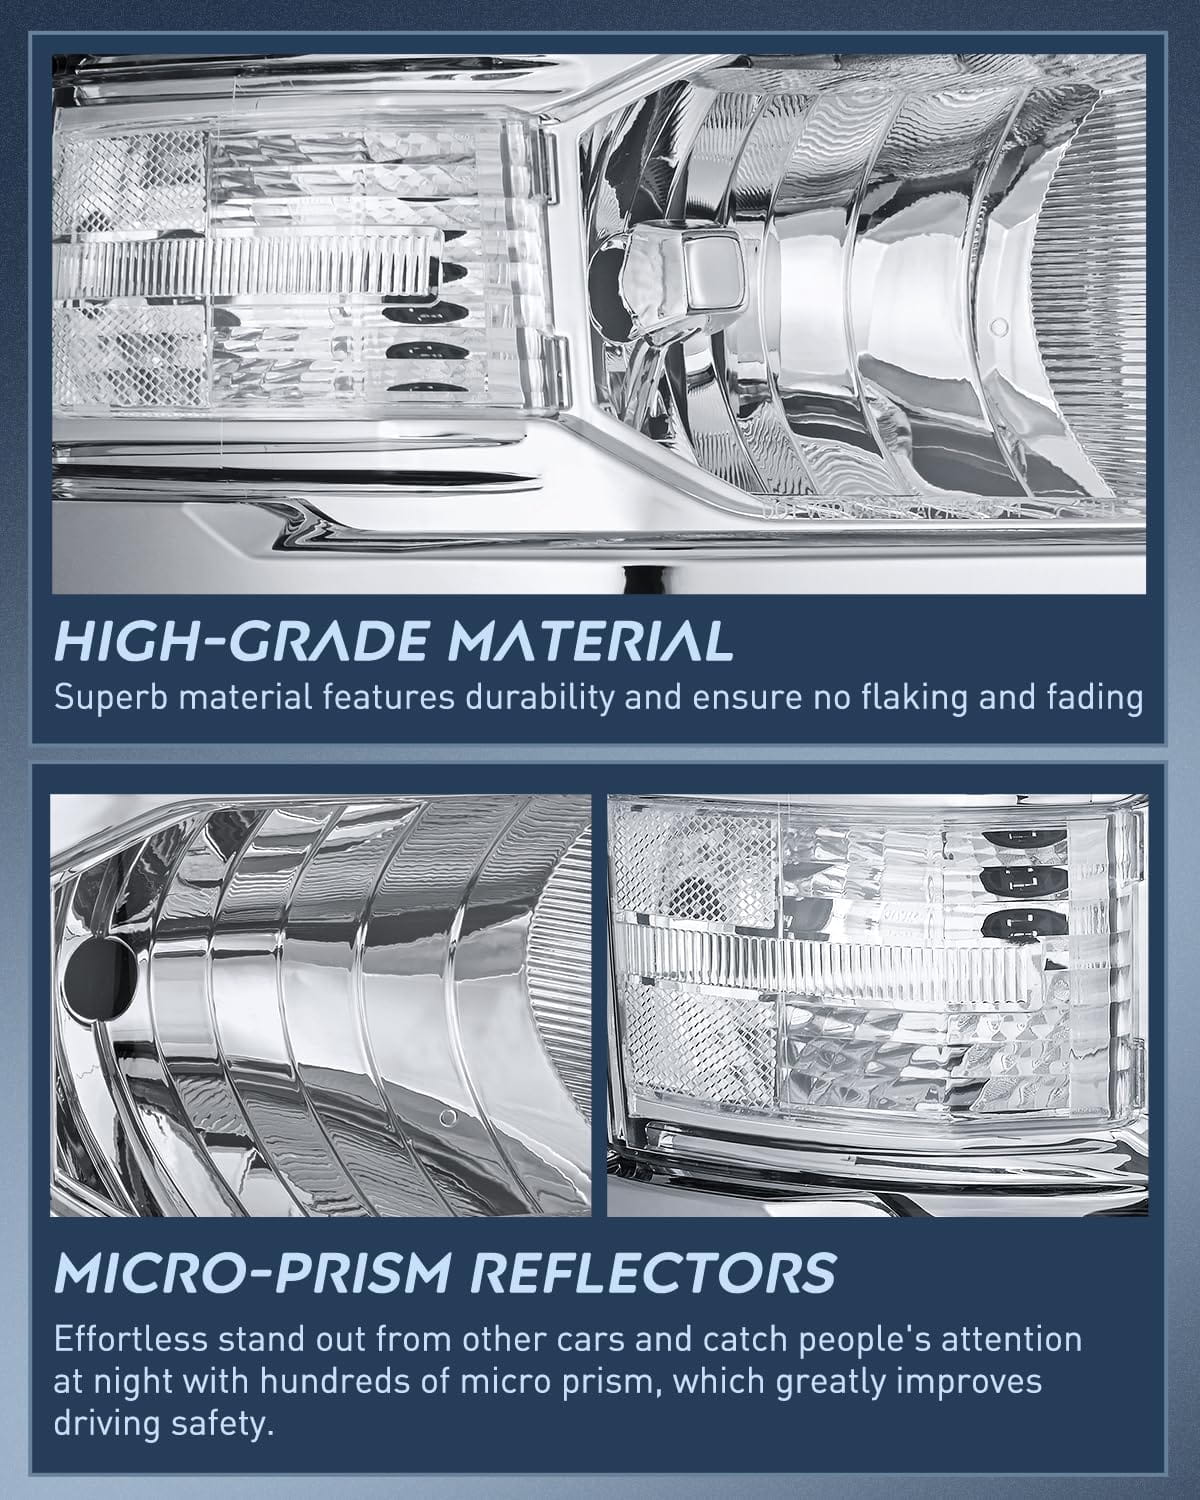 2014 2015 Chevy Silverado 1500 Headlight Assembly Chrome Housing Clear Reflector Nilight